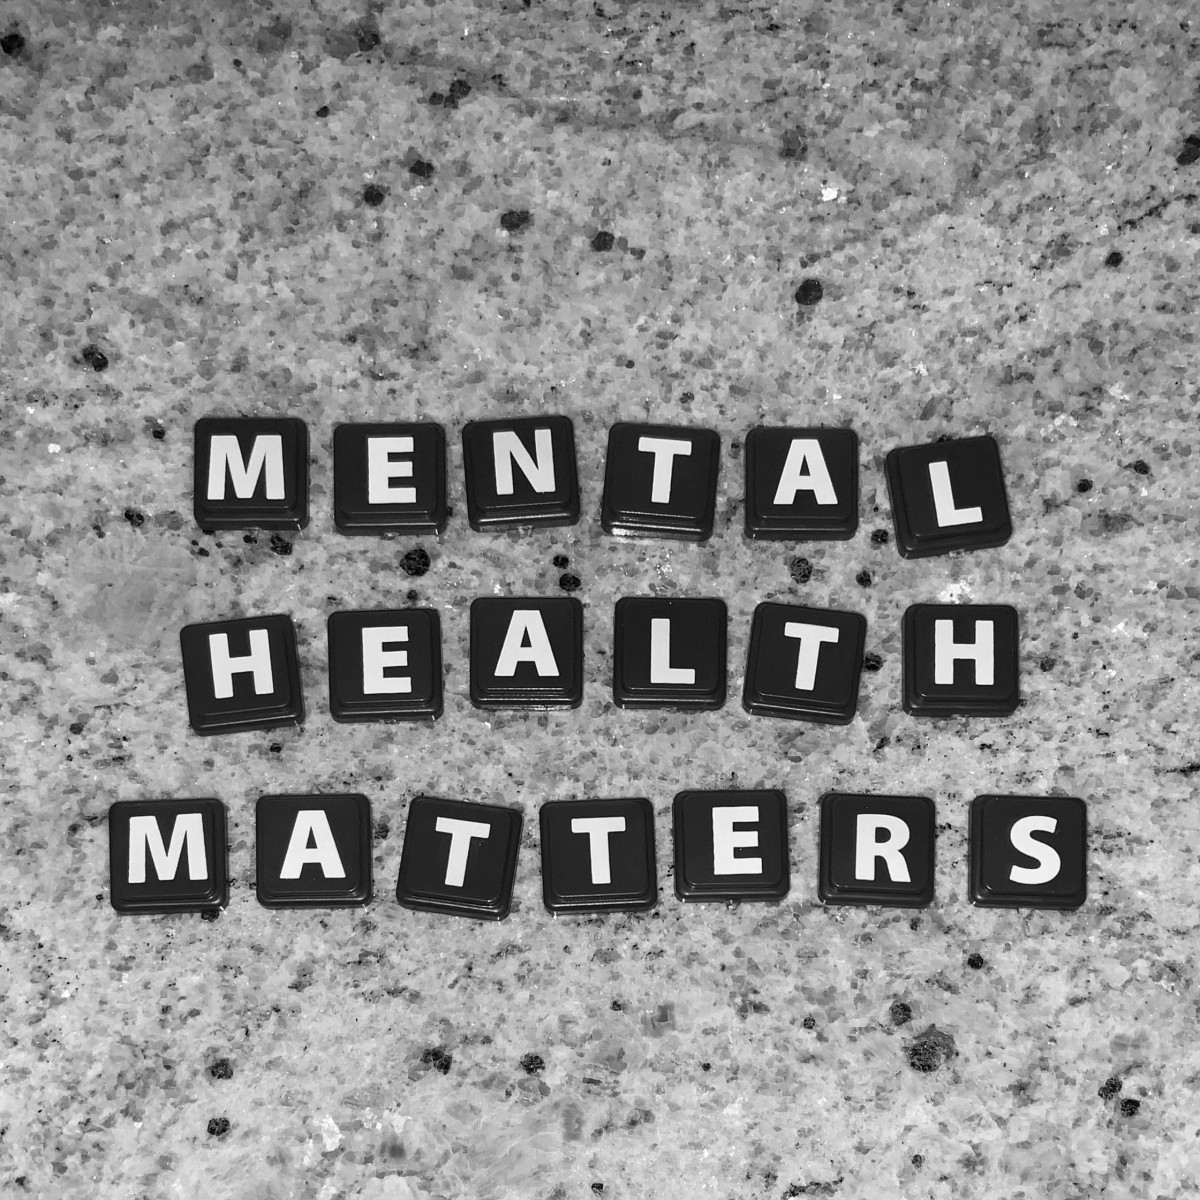 Scrabble tiles spelling 'Mental Health Matters'